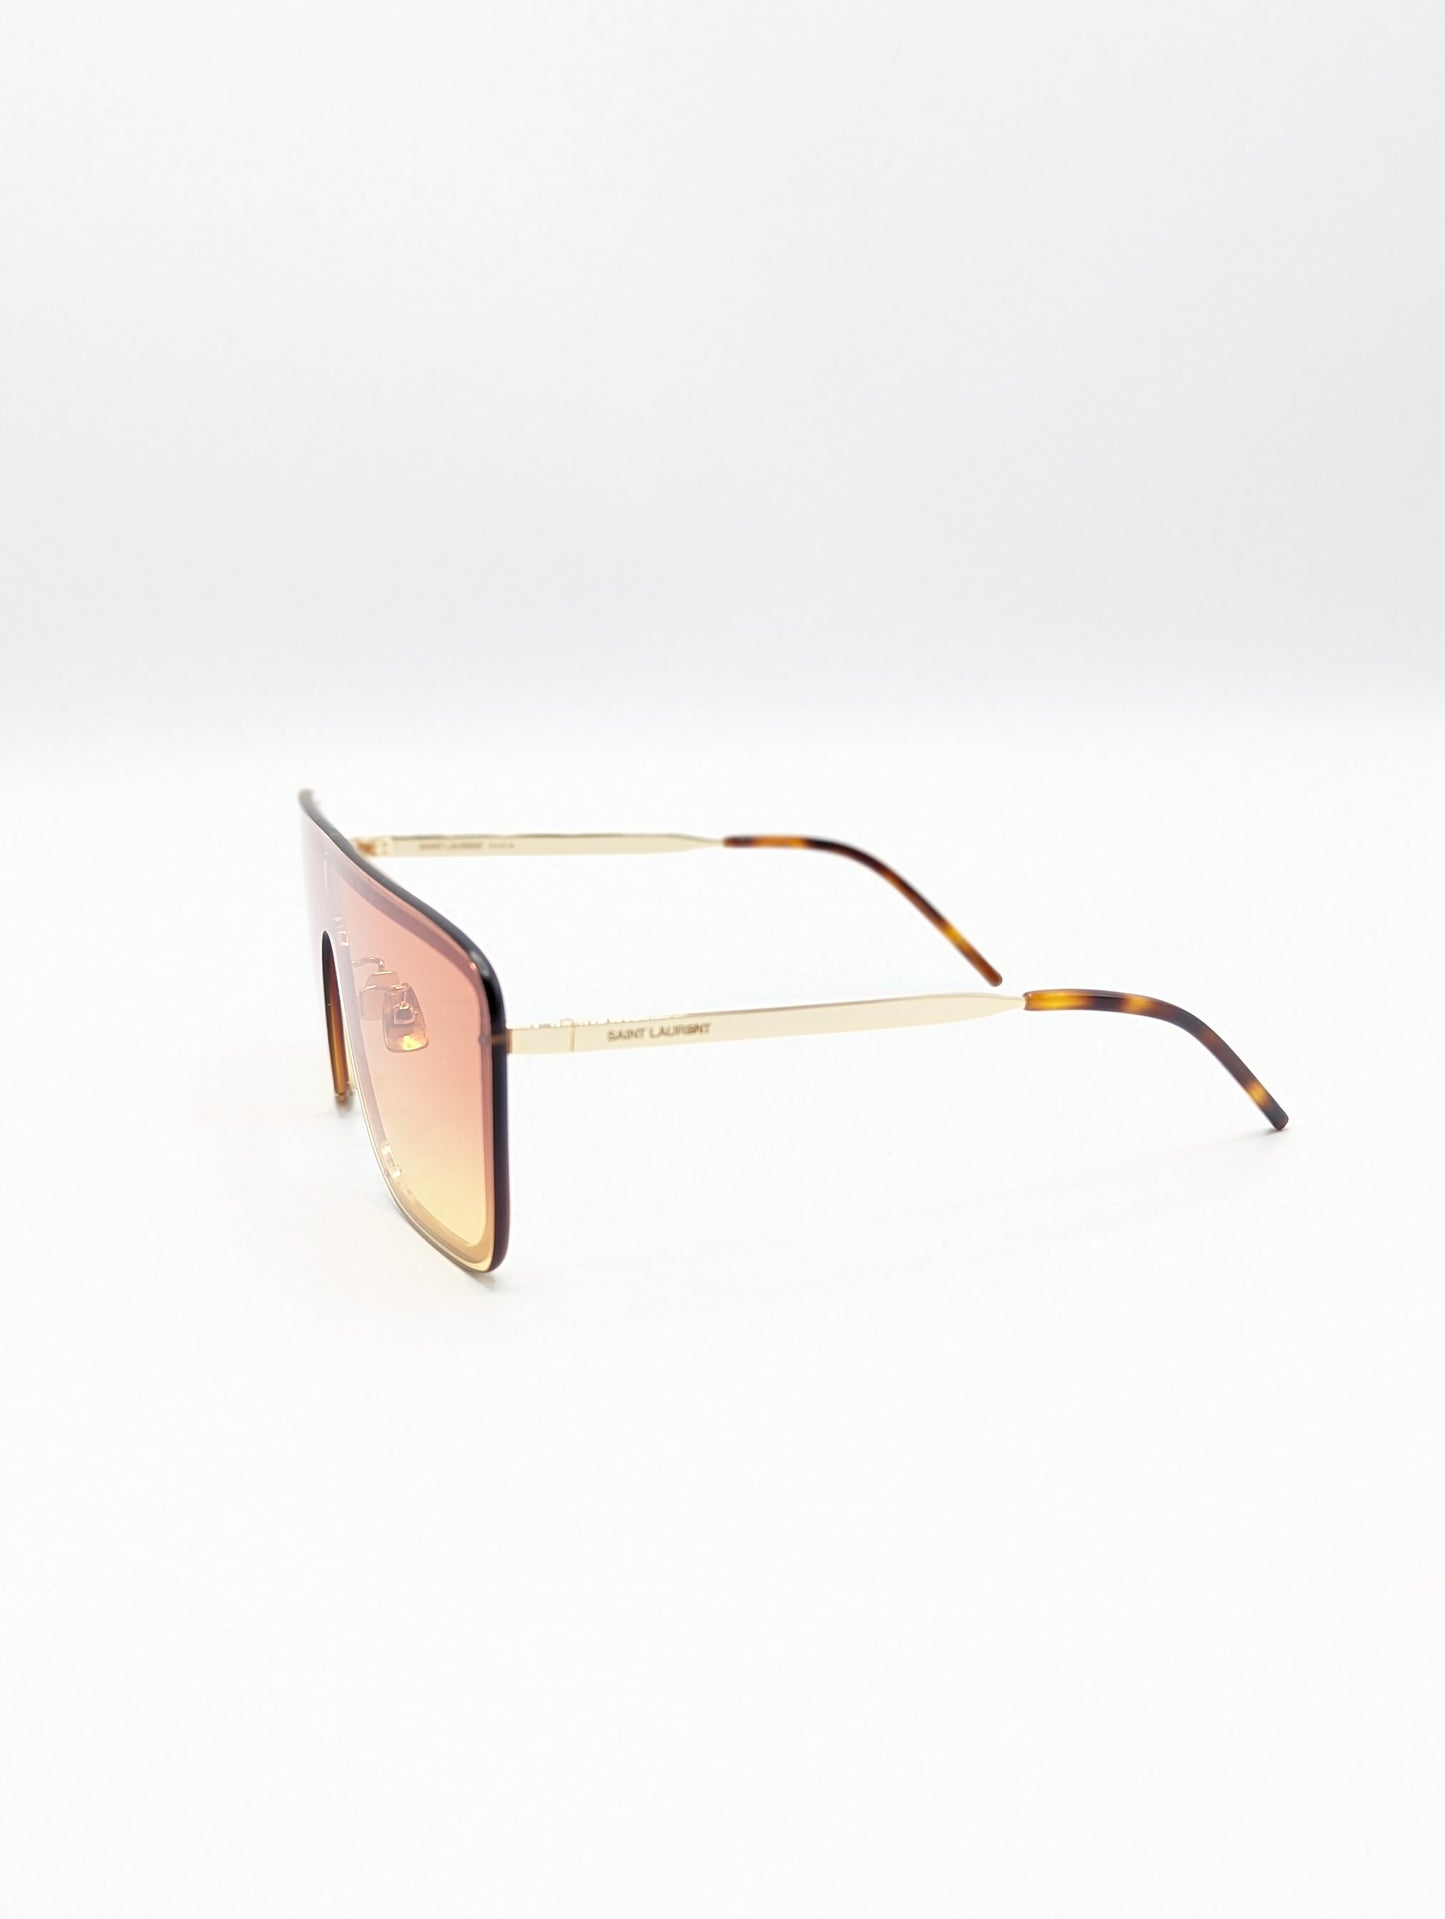 Saint Laurent New Wave 364 Sunglasses